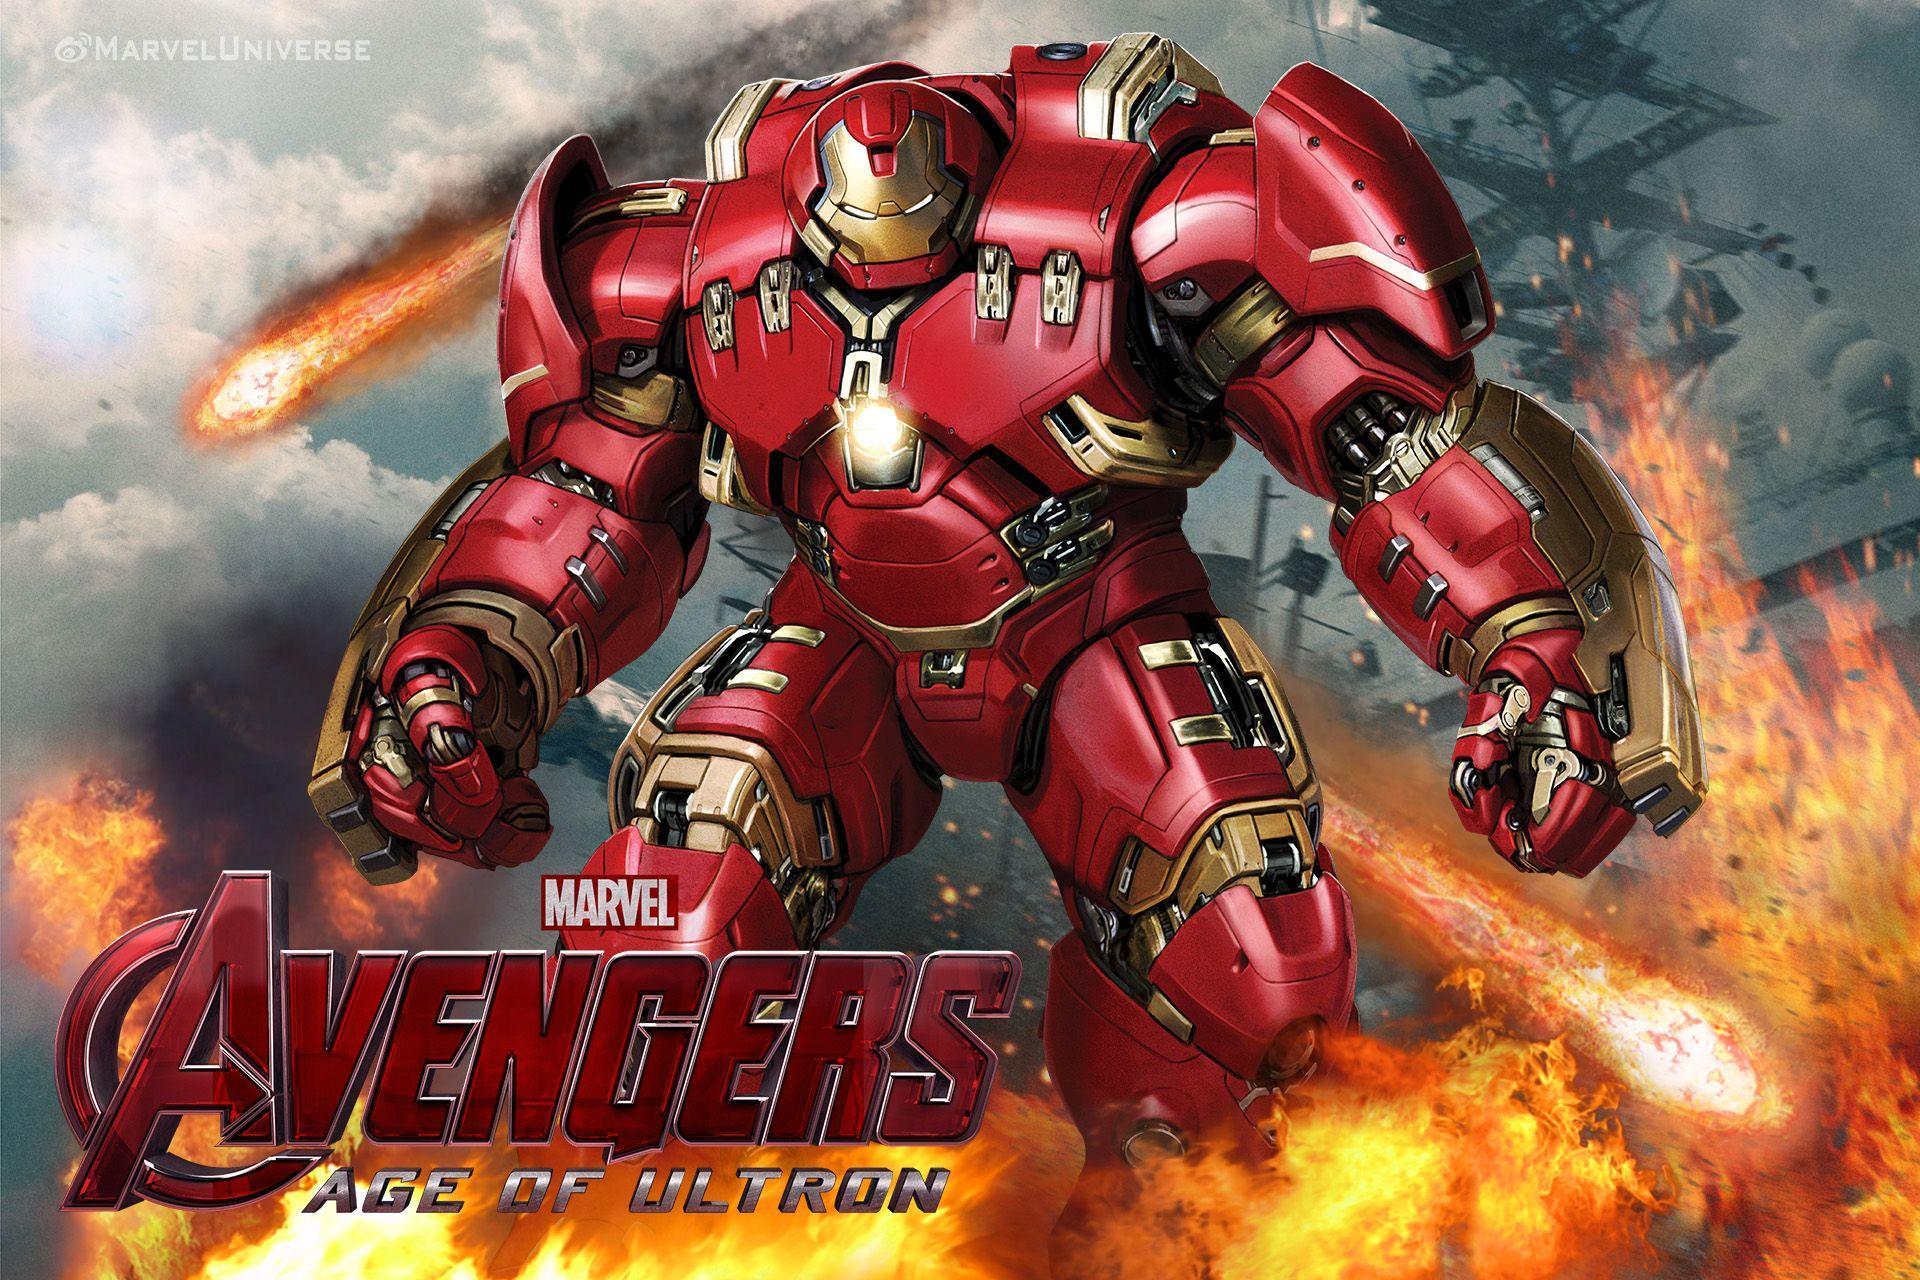 Iron Man Hulkbuster Wallpaper